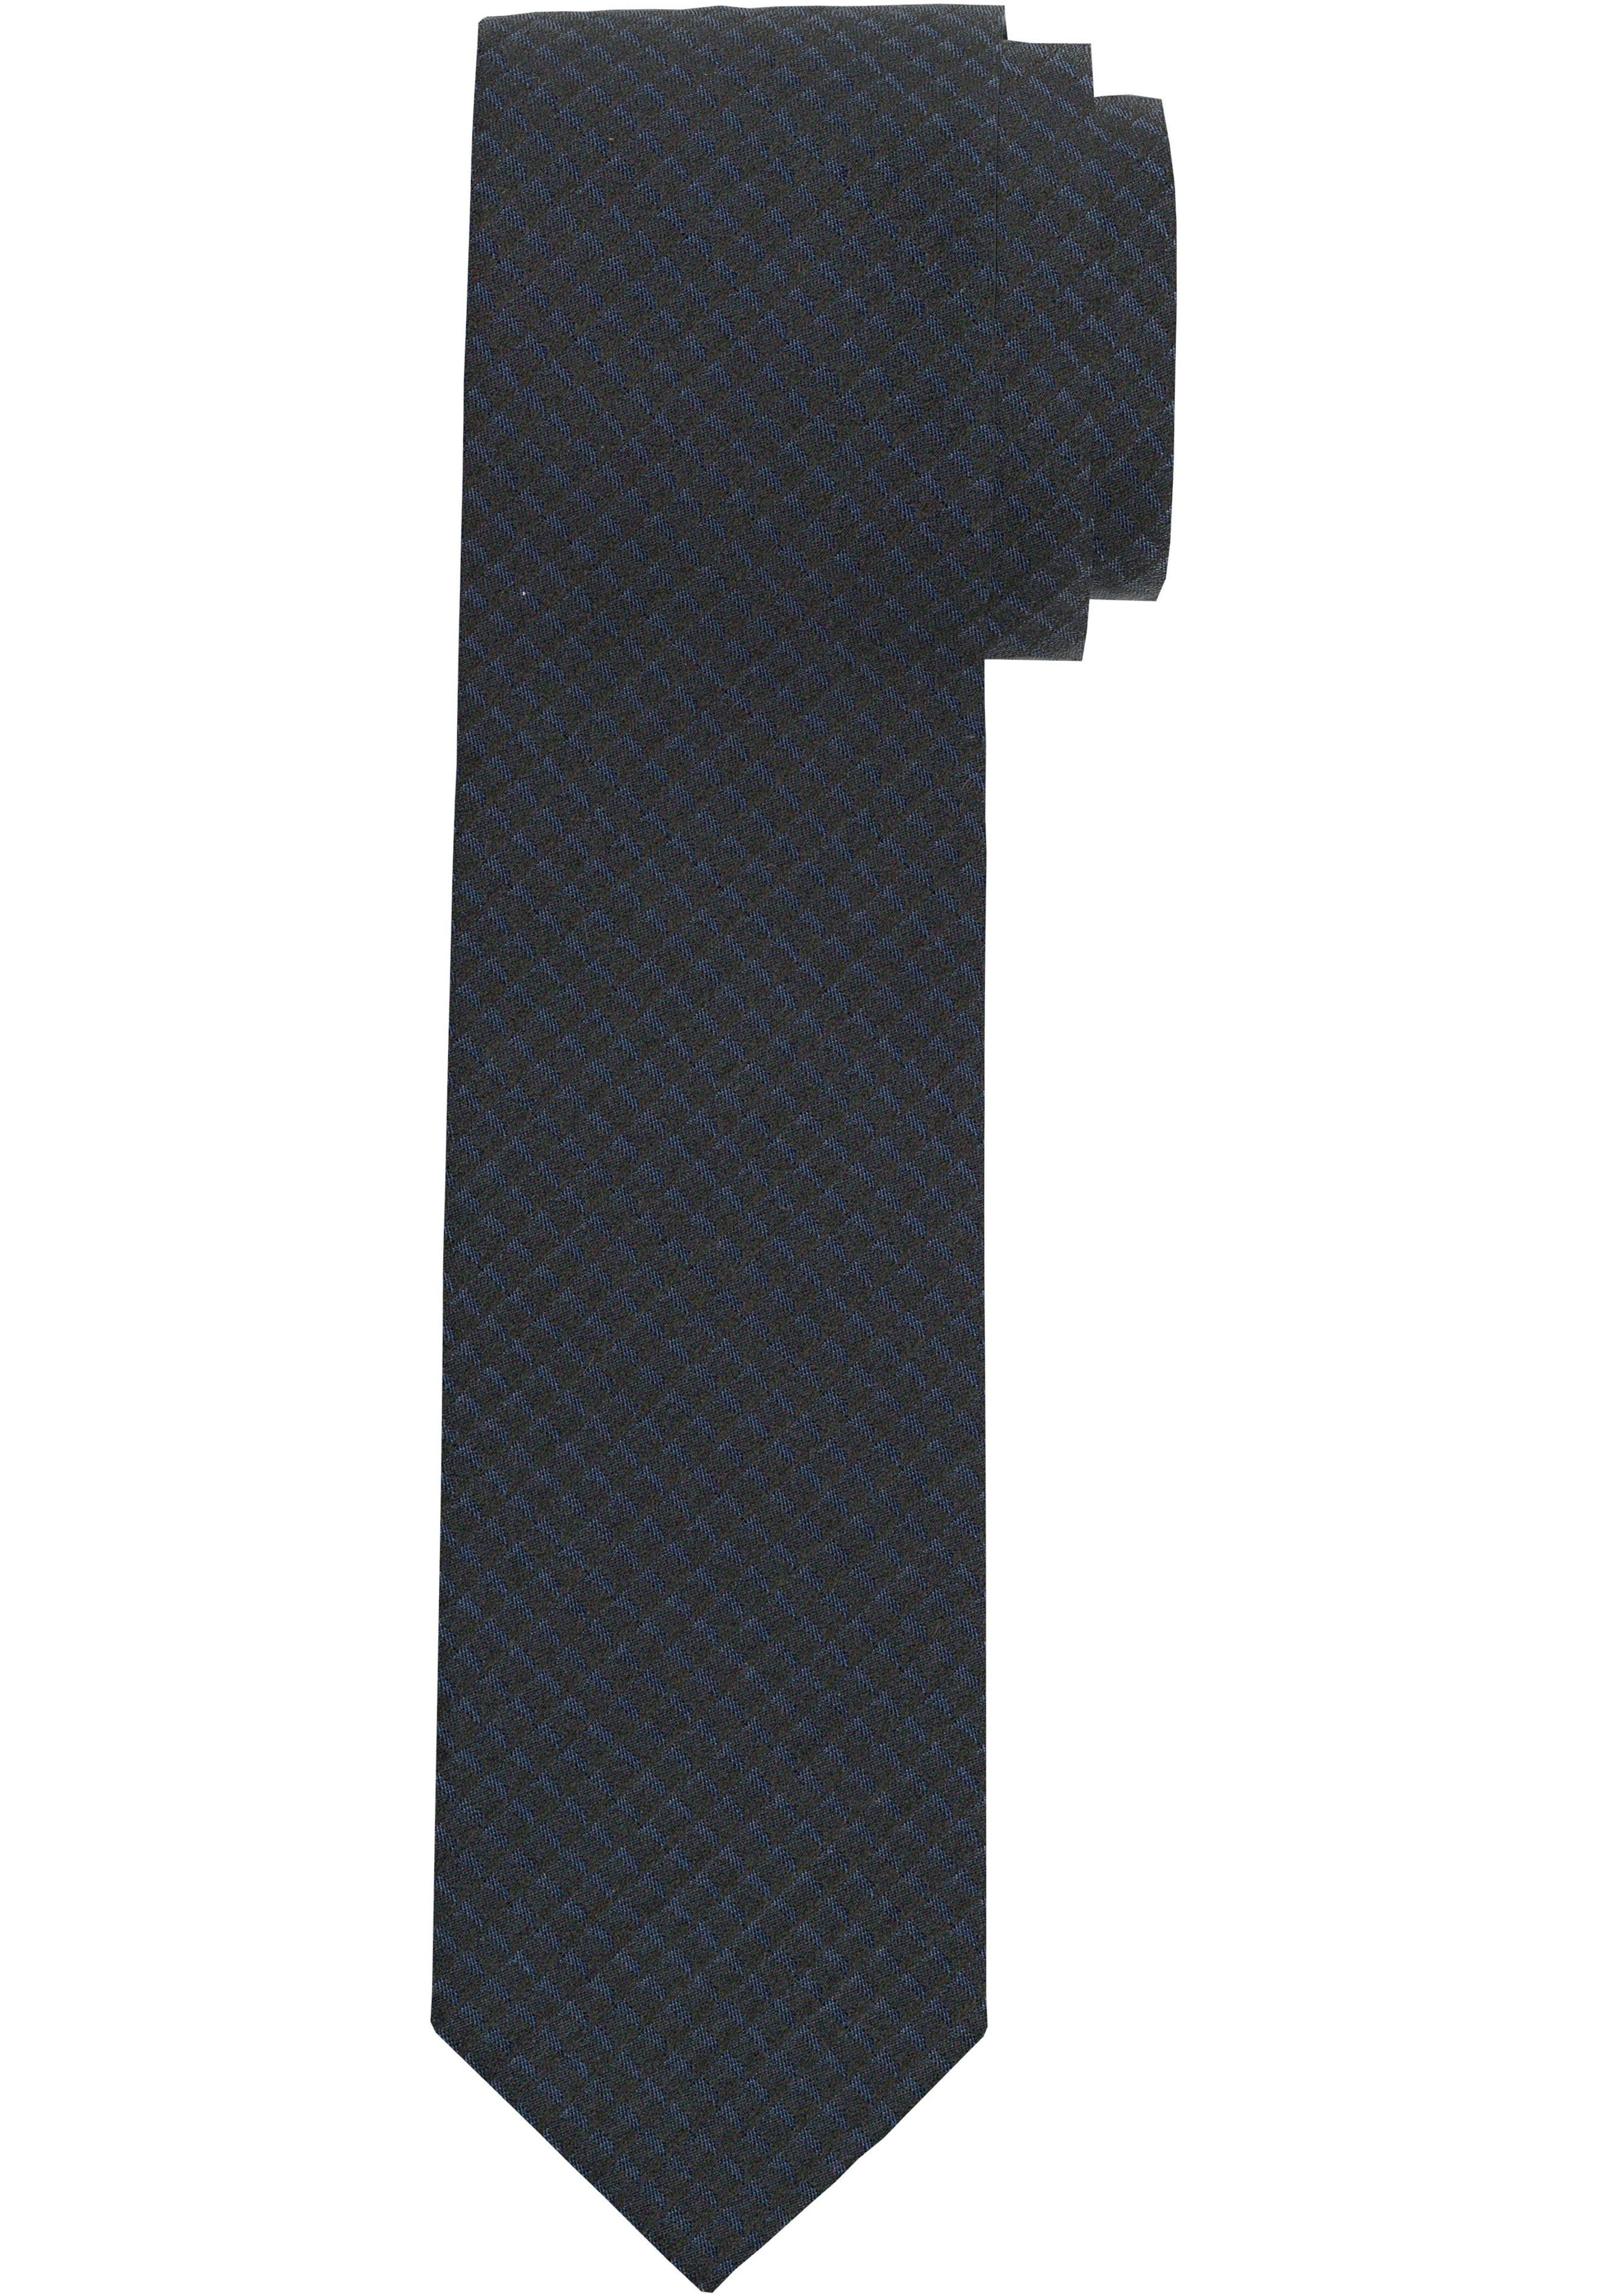 OLYMP Krawatte Krawatte mit Strukturmuster marine | Breite Krawatten